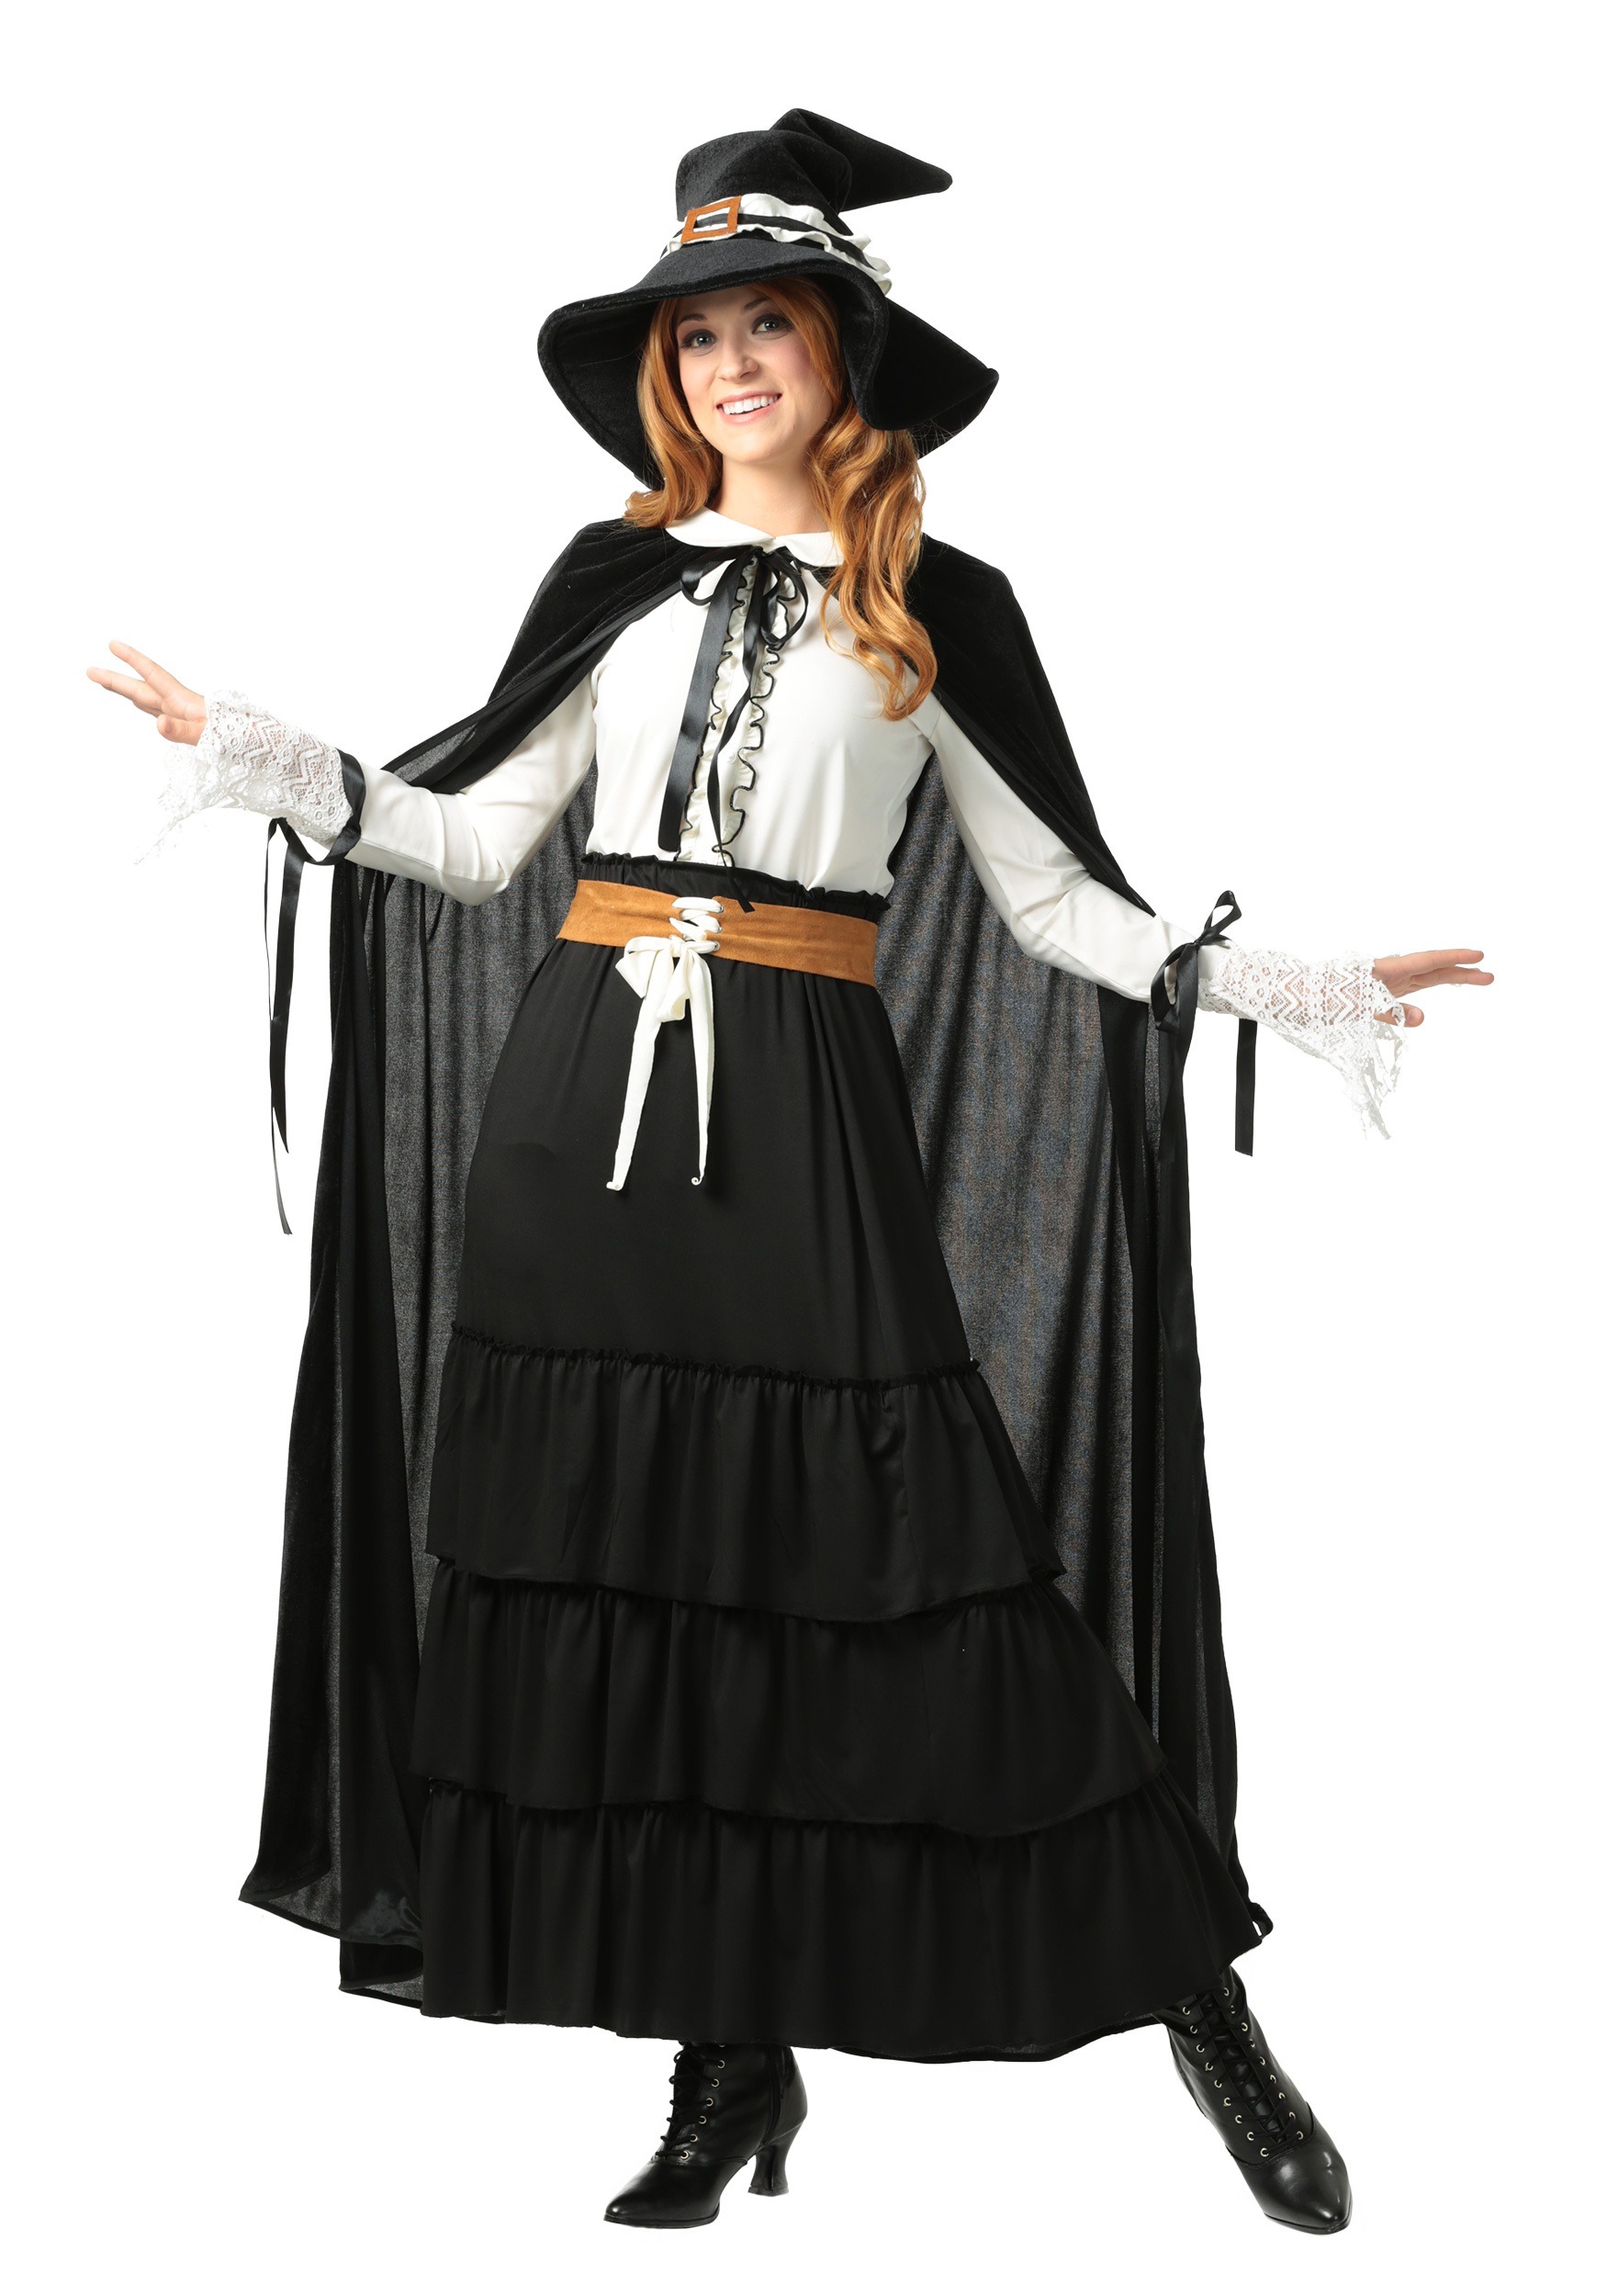 Photos - Fancy Dress FUN Costumes Salem Witch Plus Size Costume for Women Black/White FUN24